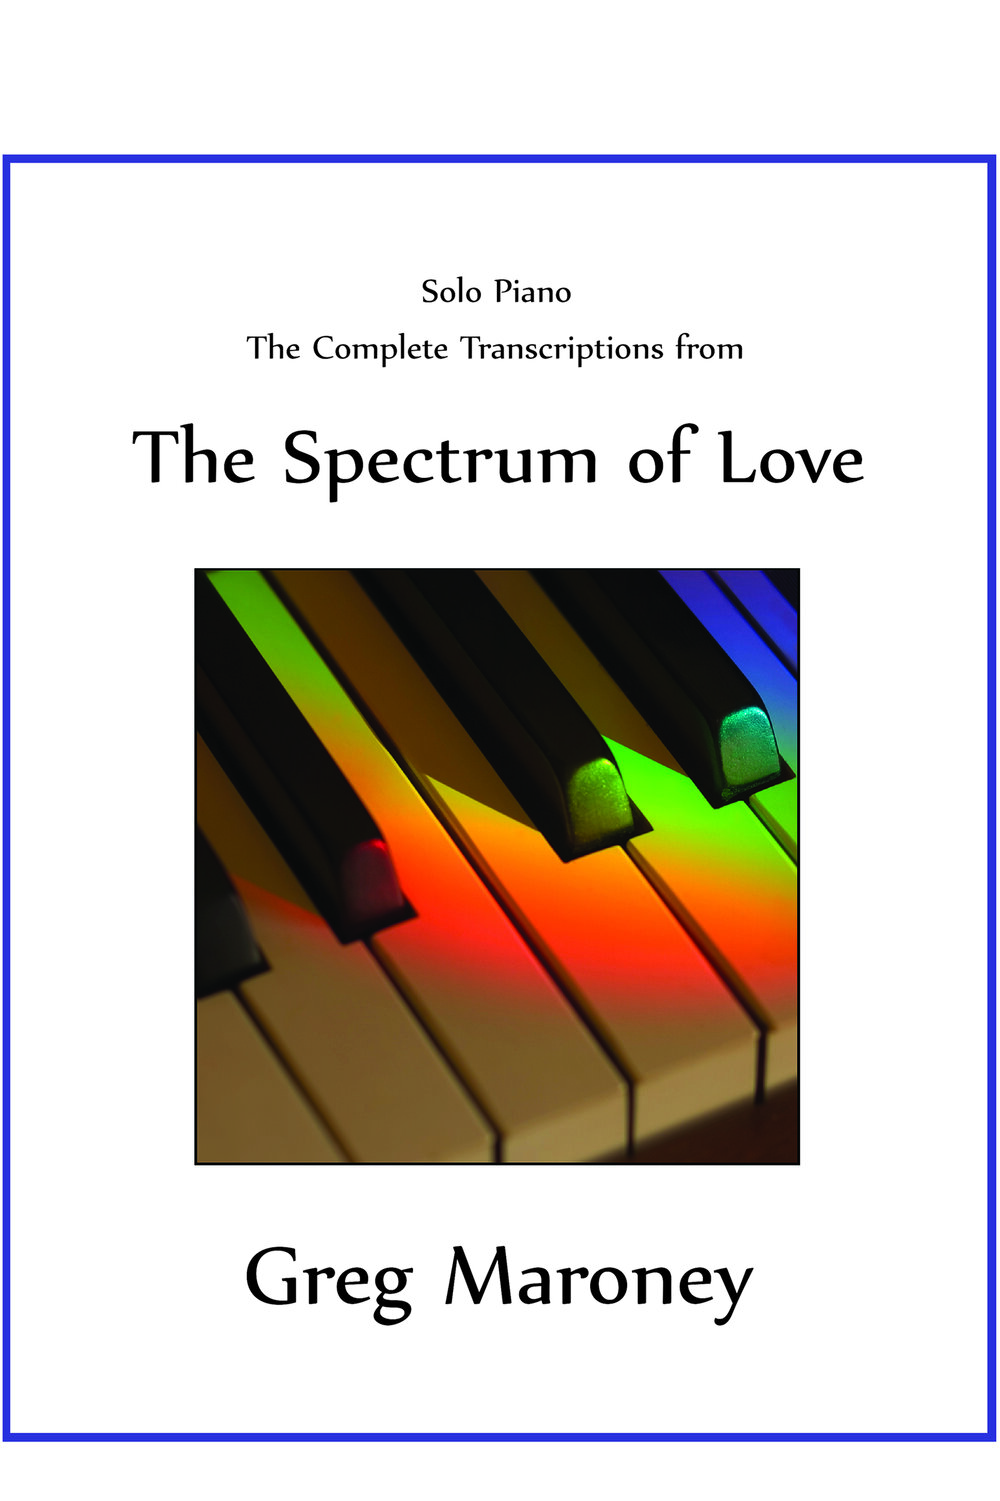 The Spectrum of Love — Greg Maroney